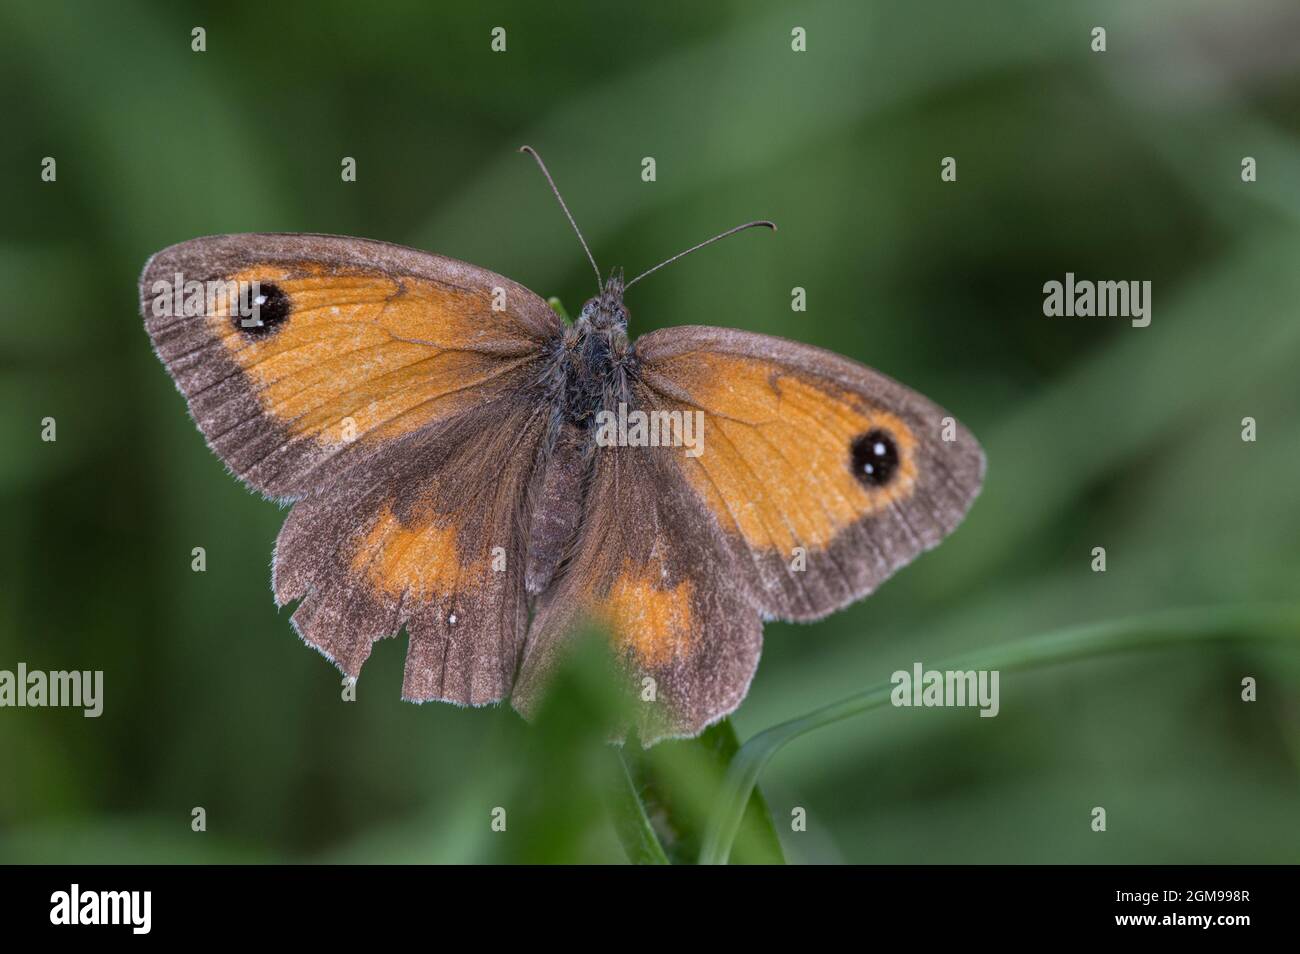 Gatekeeper butterfly resting on grass stem. Stock Photo